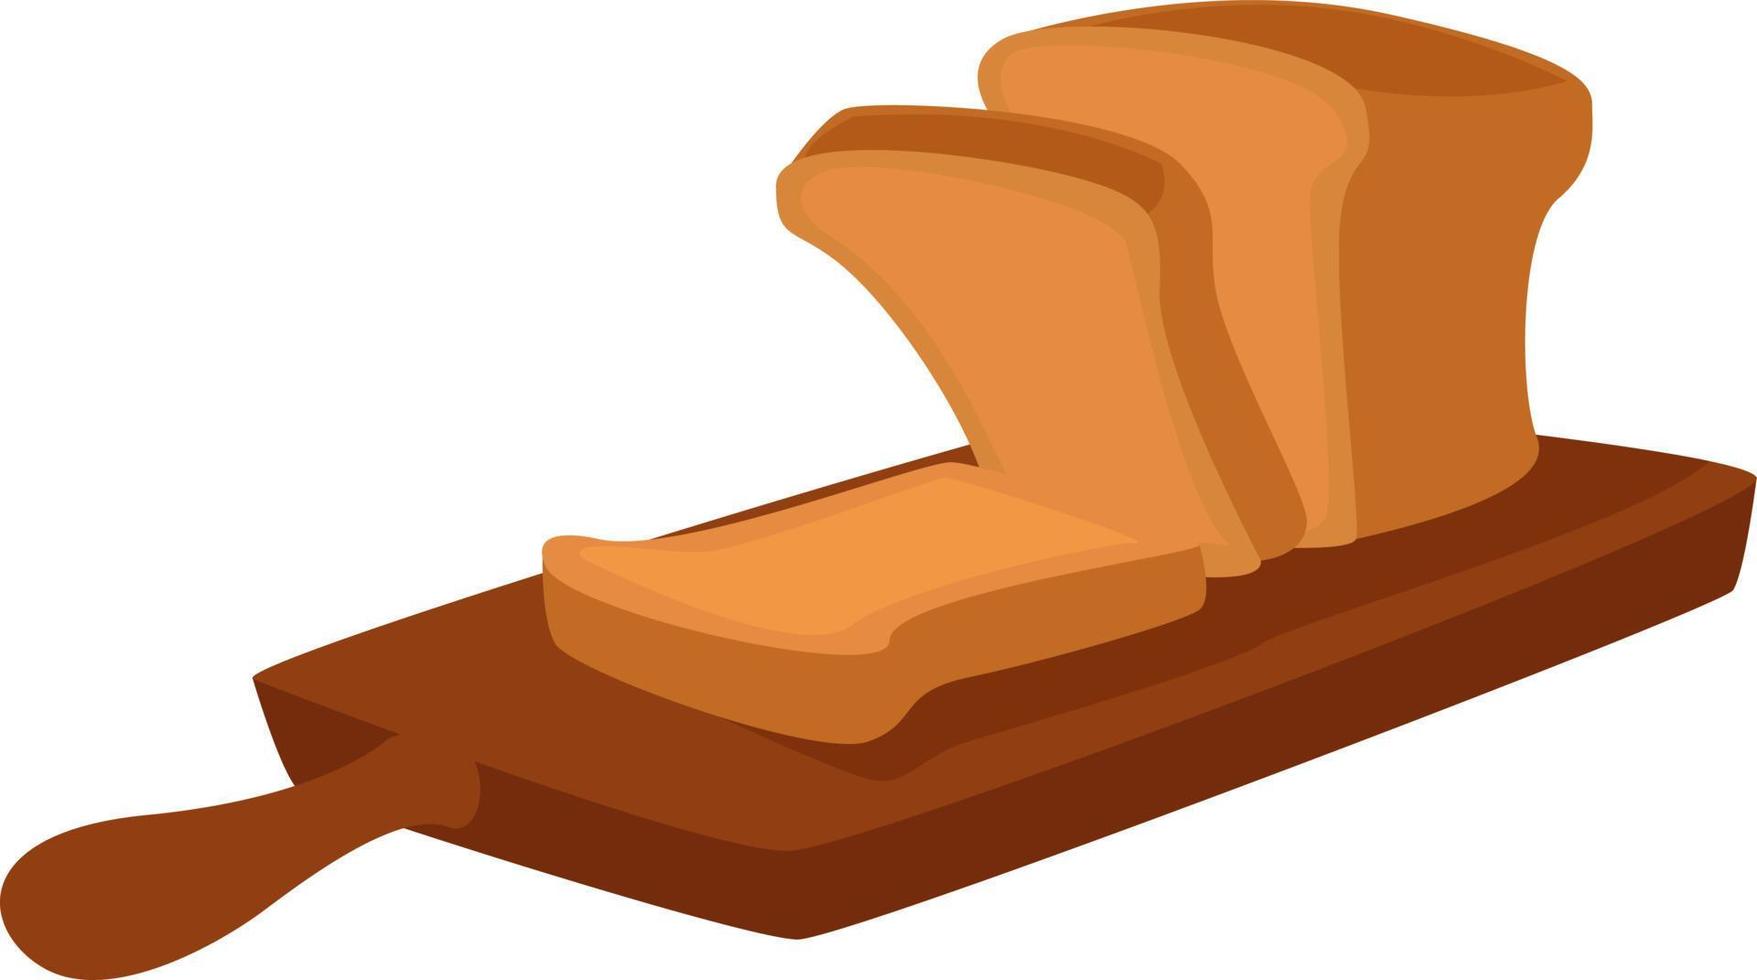 Sliced bread, illustration, vector on white background